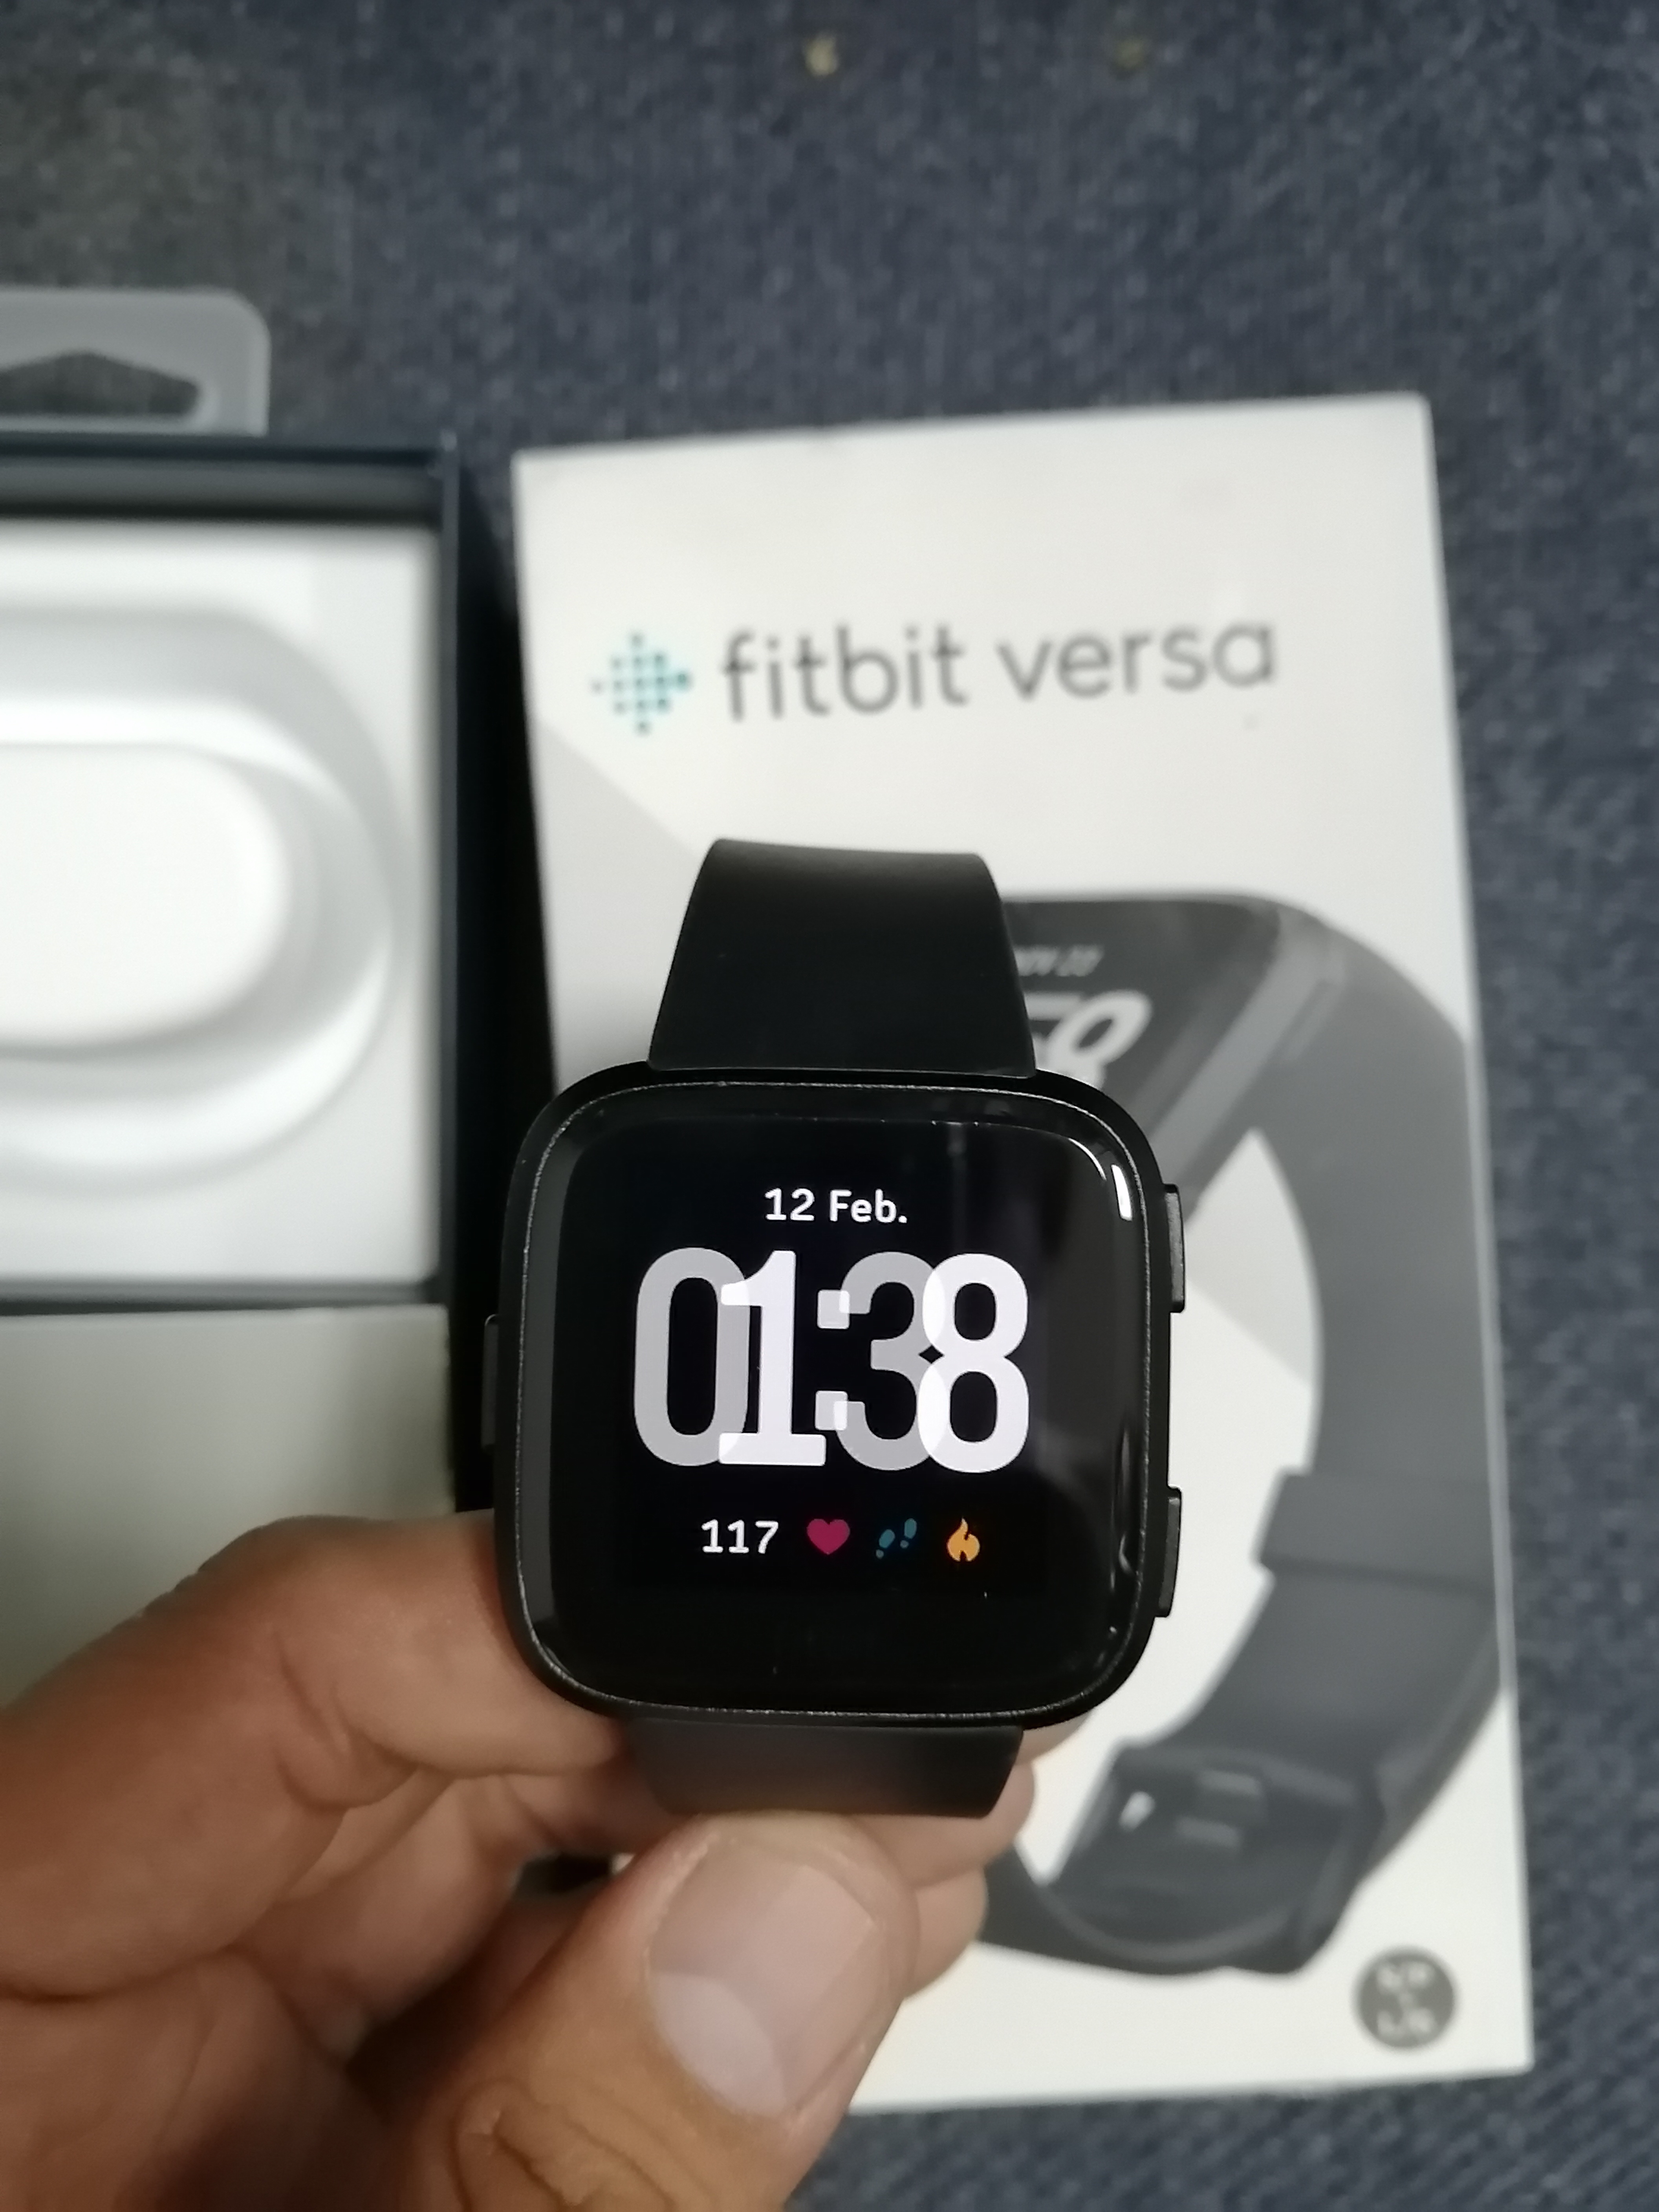 Smart watch Fit Bit Versa